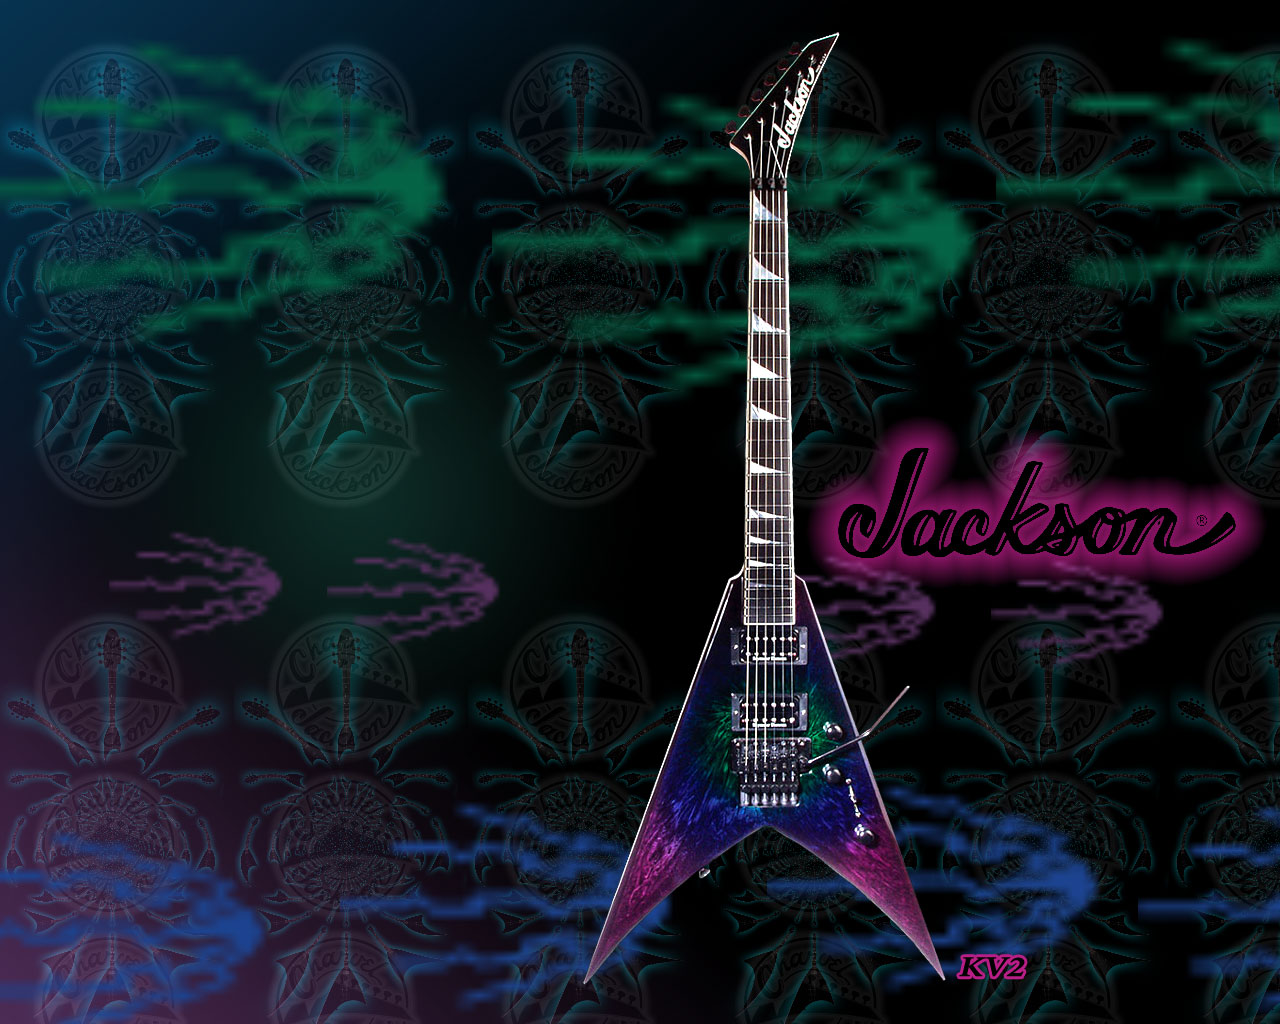 Guitar Jackson Wallpaper HD In Music Imageci